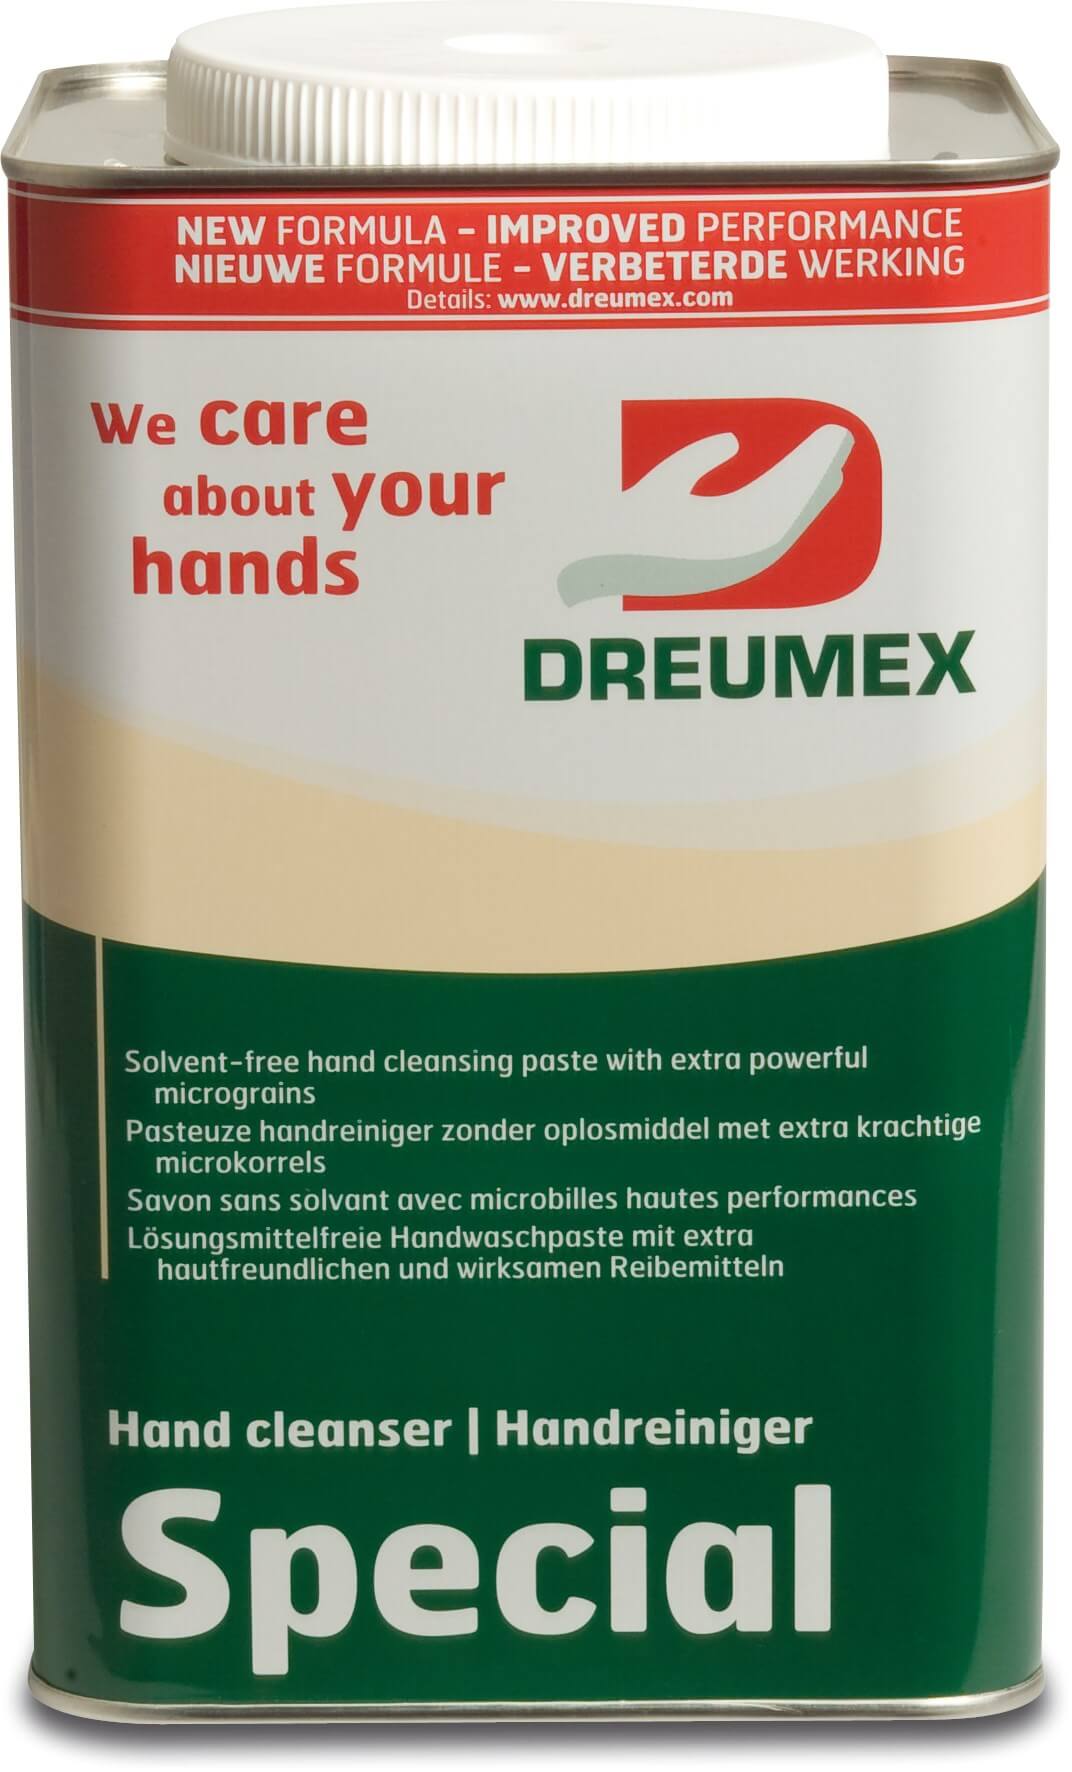 Dreumex Handreiniger crème type Special 4.2 kg